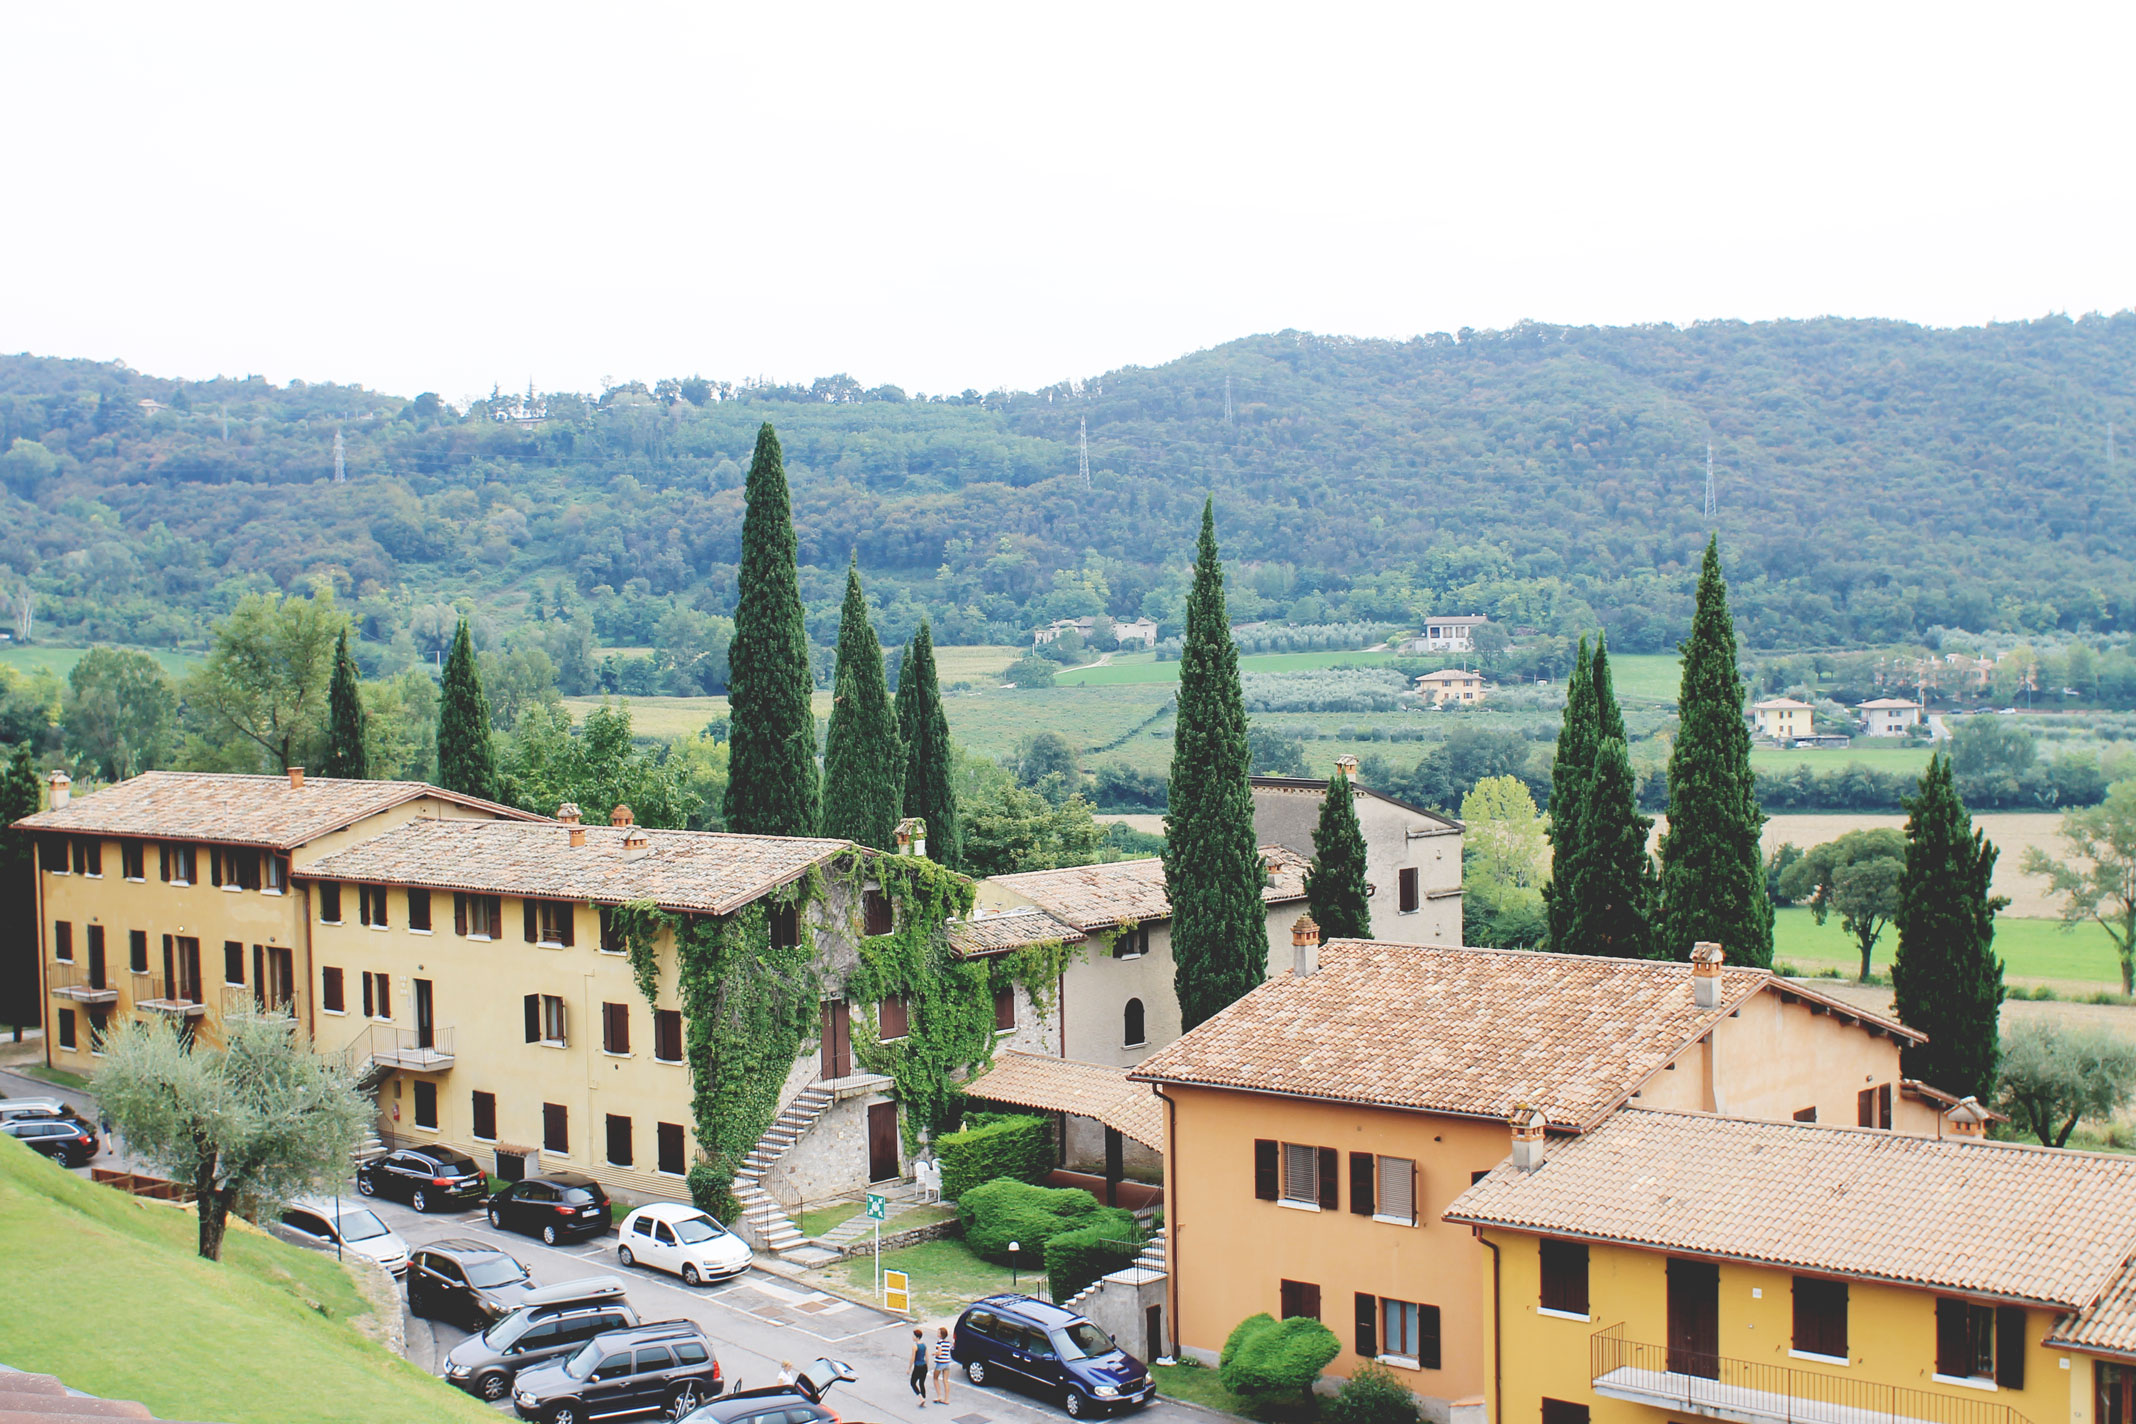 Styleat30 Travel Blog - Poiano Resort Hotel Review - Lake Garda Holiday - Italy Travel Guide 09